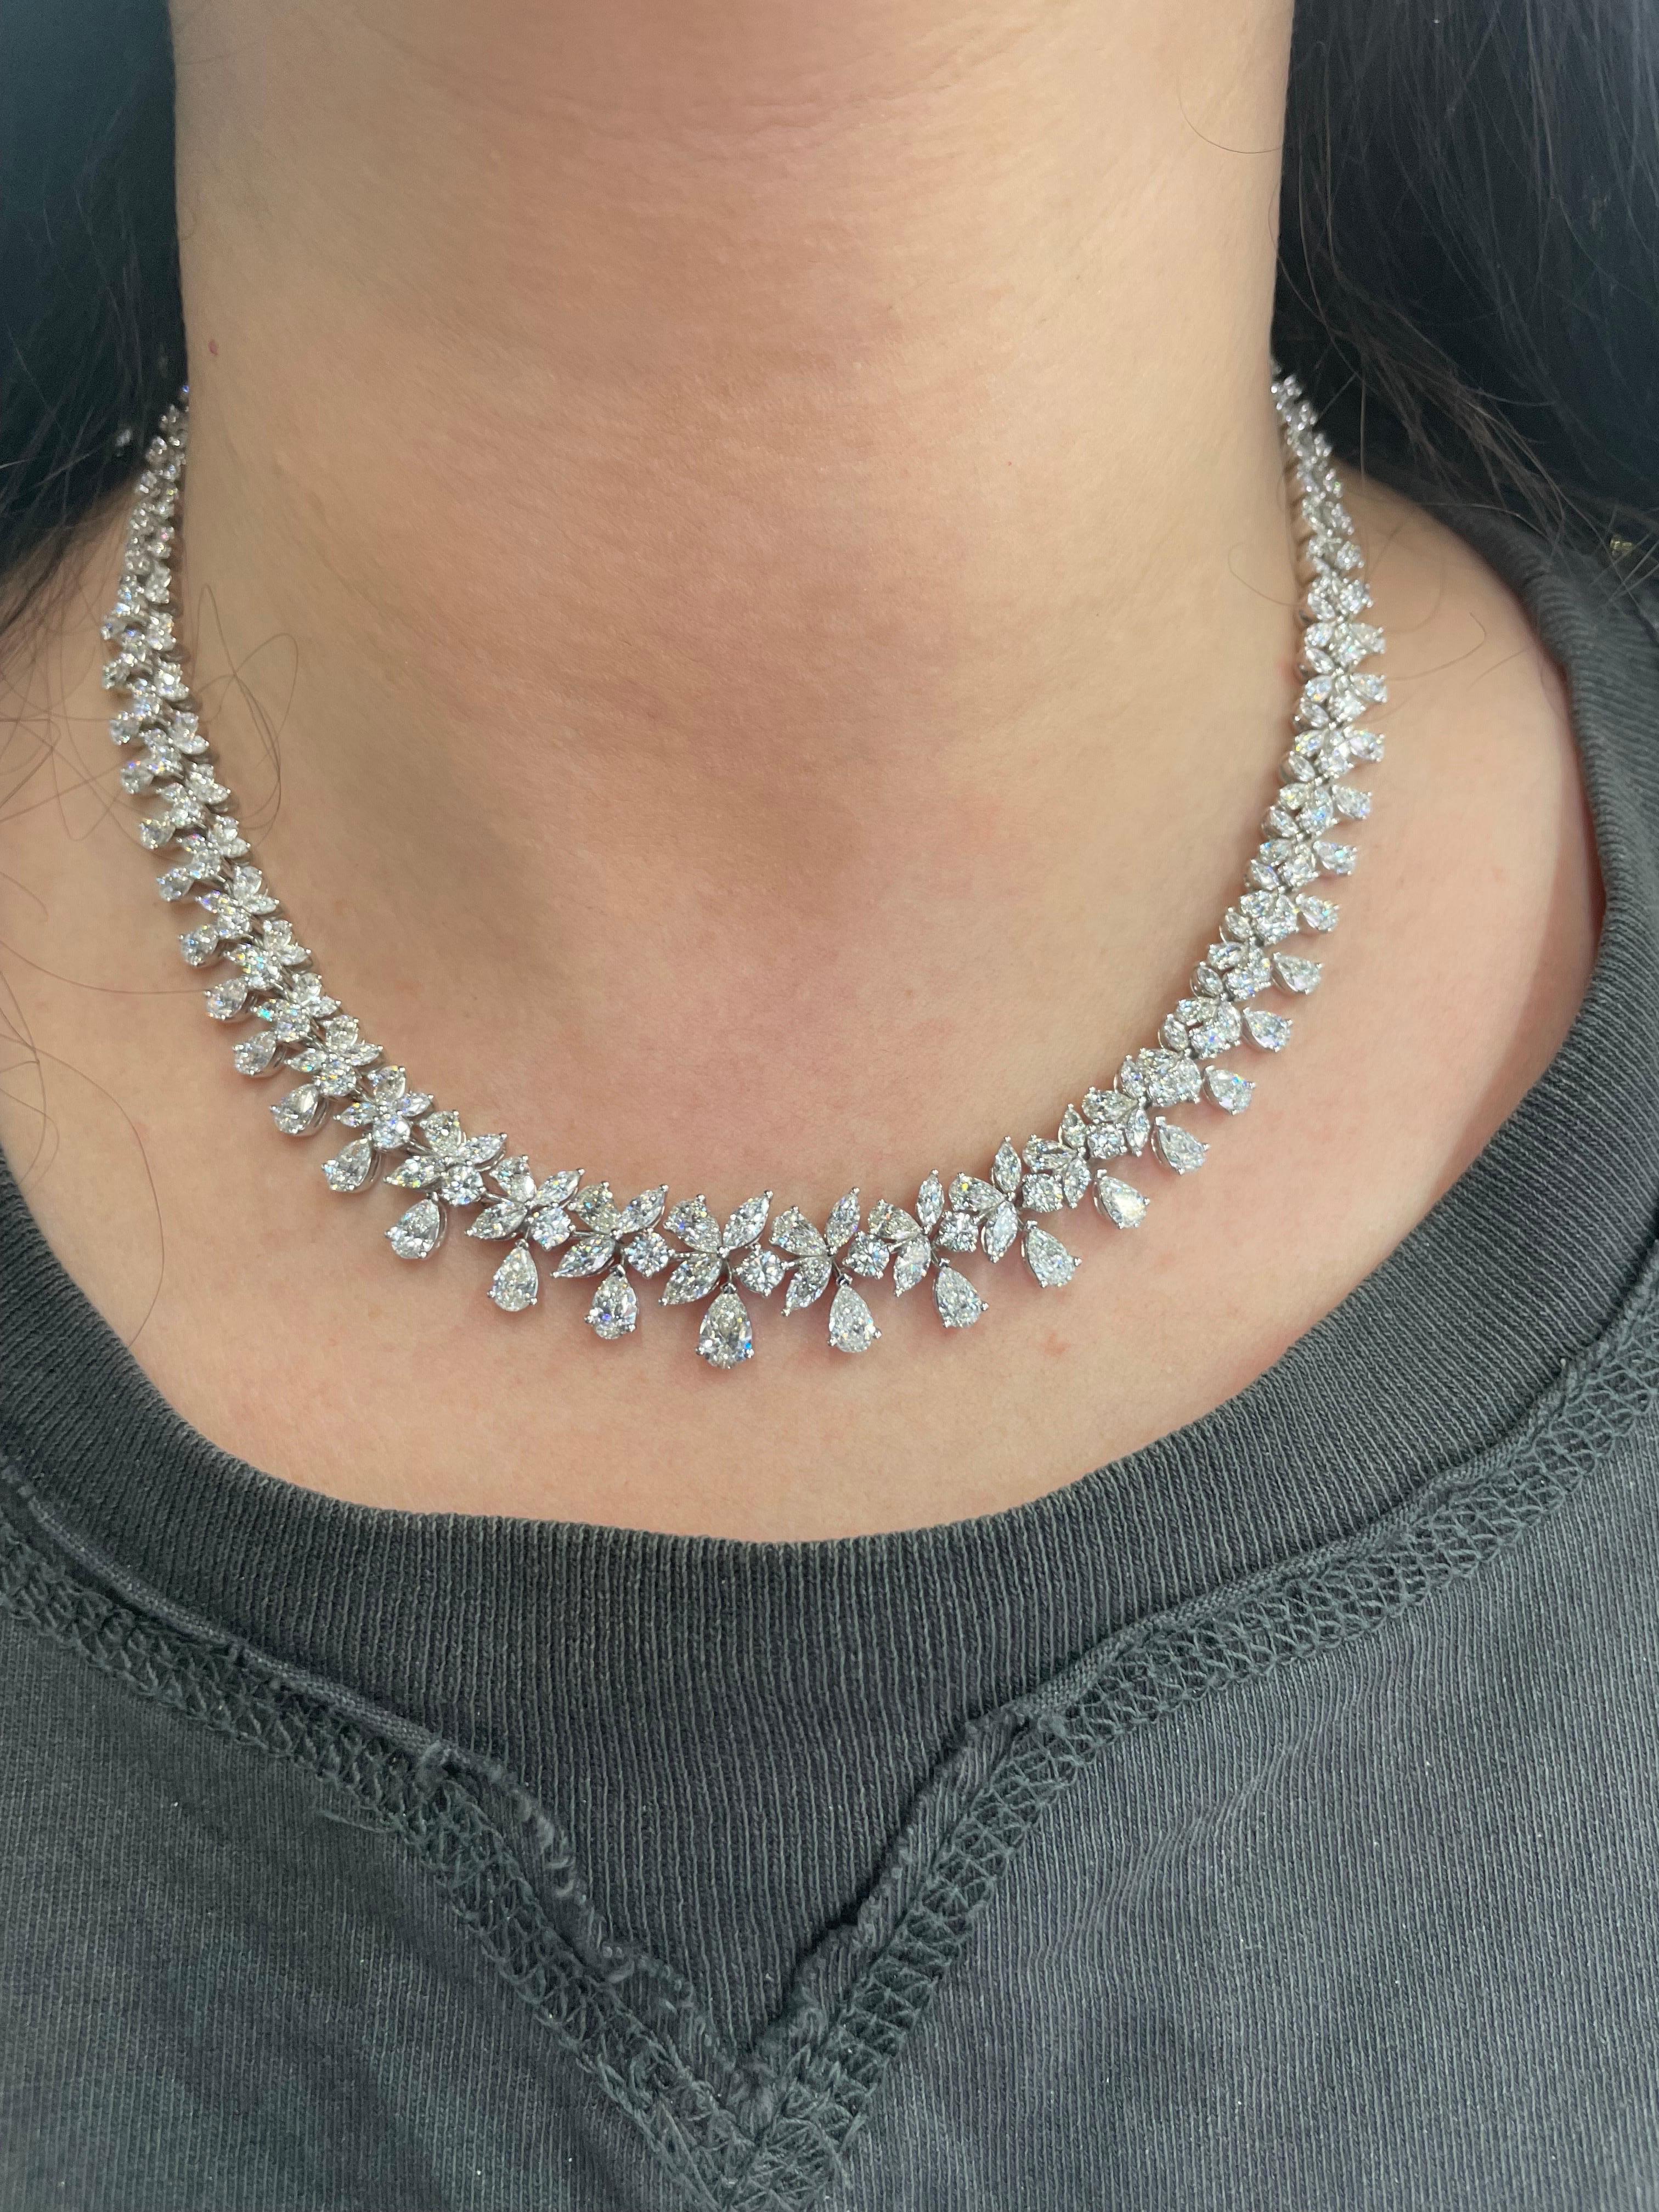 Diamond Floral Cluster Drop Necklace 26.19 Carats 18 Karat White Gold F-G VS2 For Sale